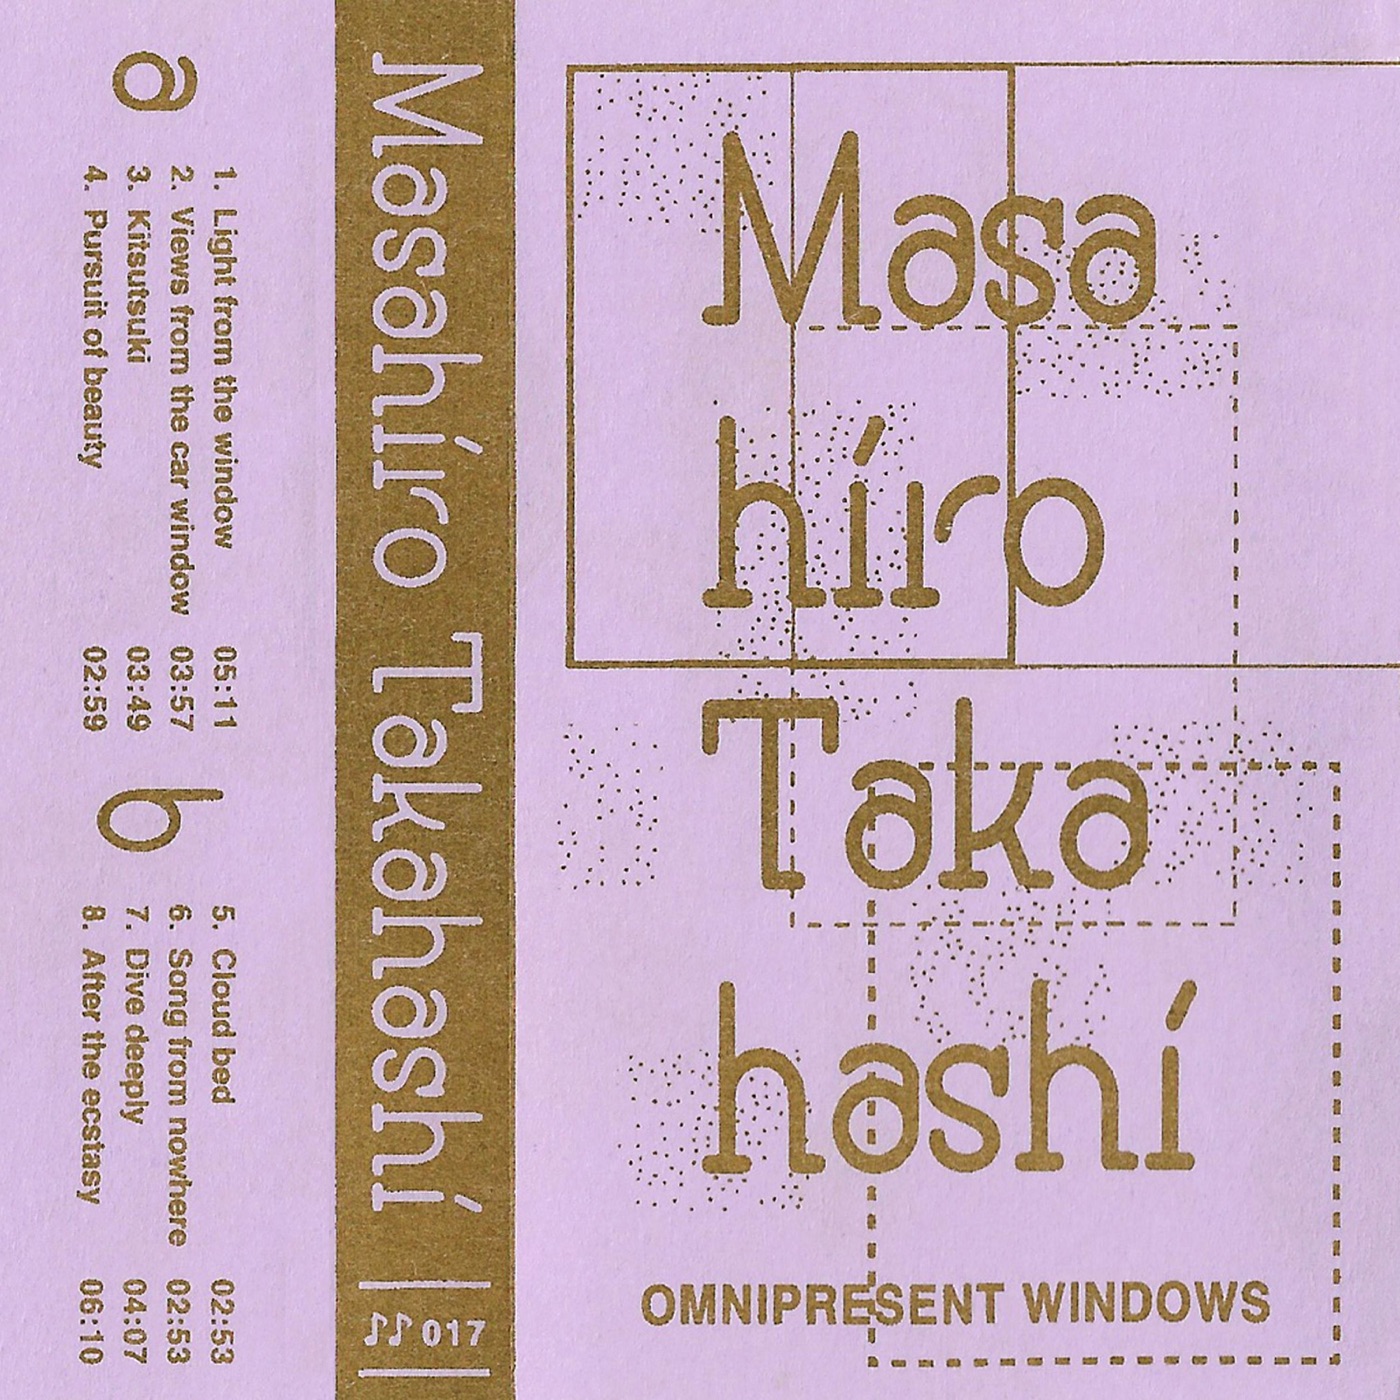 Omnipresent Windows by Masahiro Takahashi